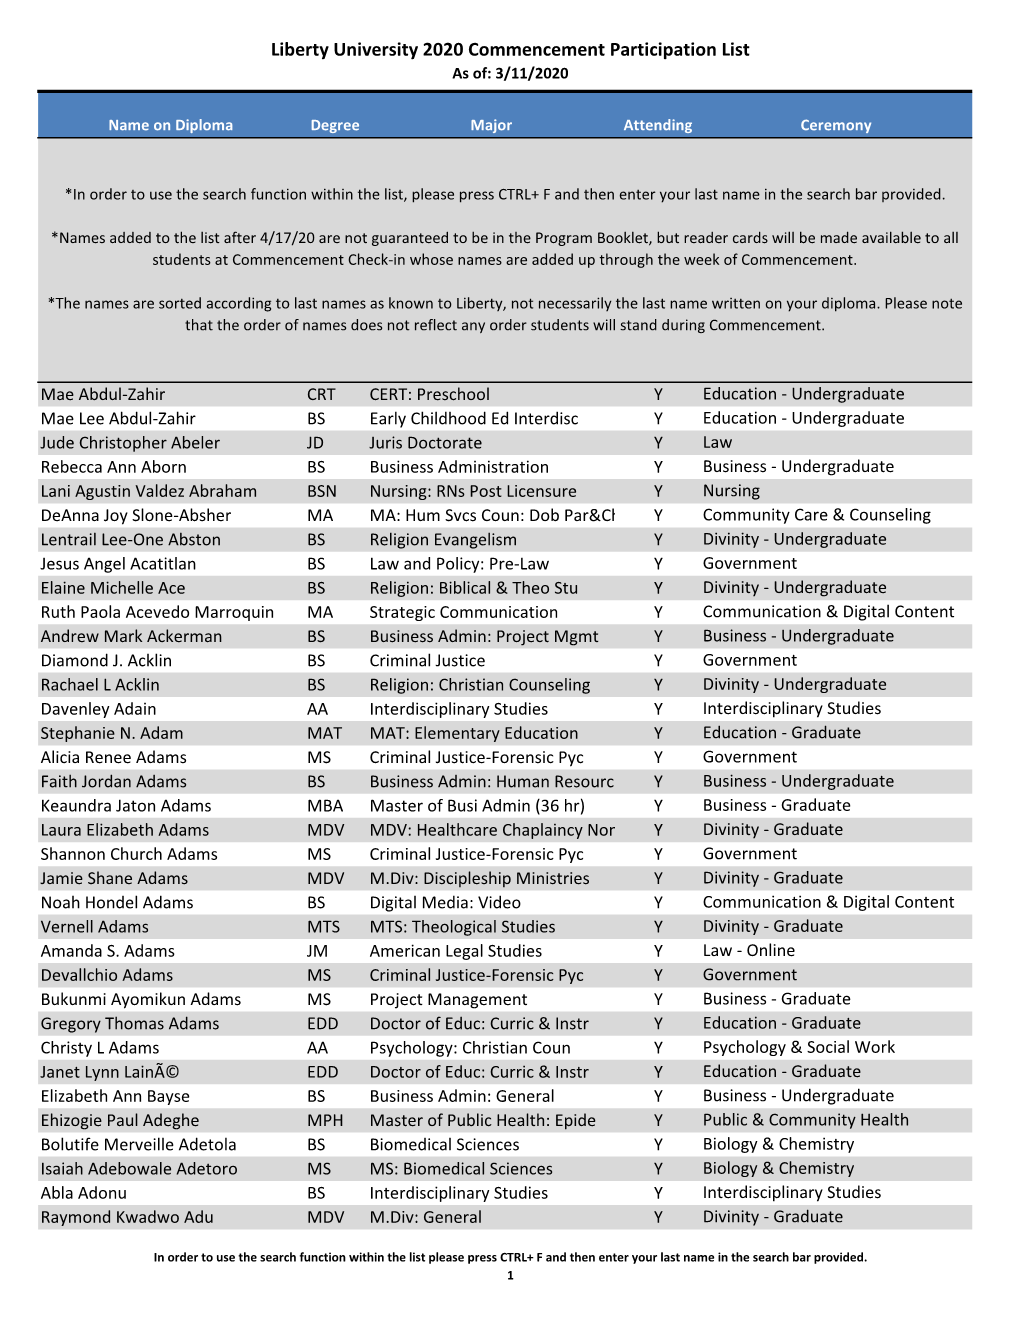 Liberty University 2020 Commencement Participation List As Of: 3/11/2020